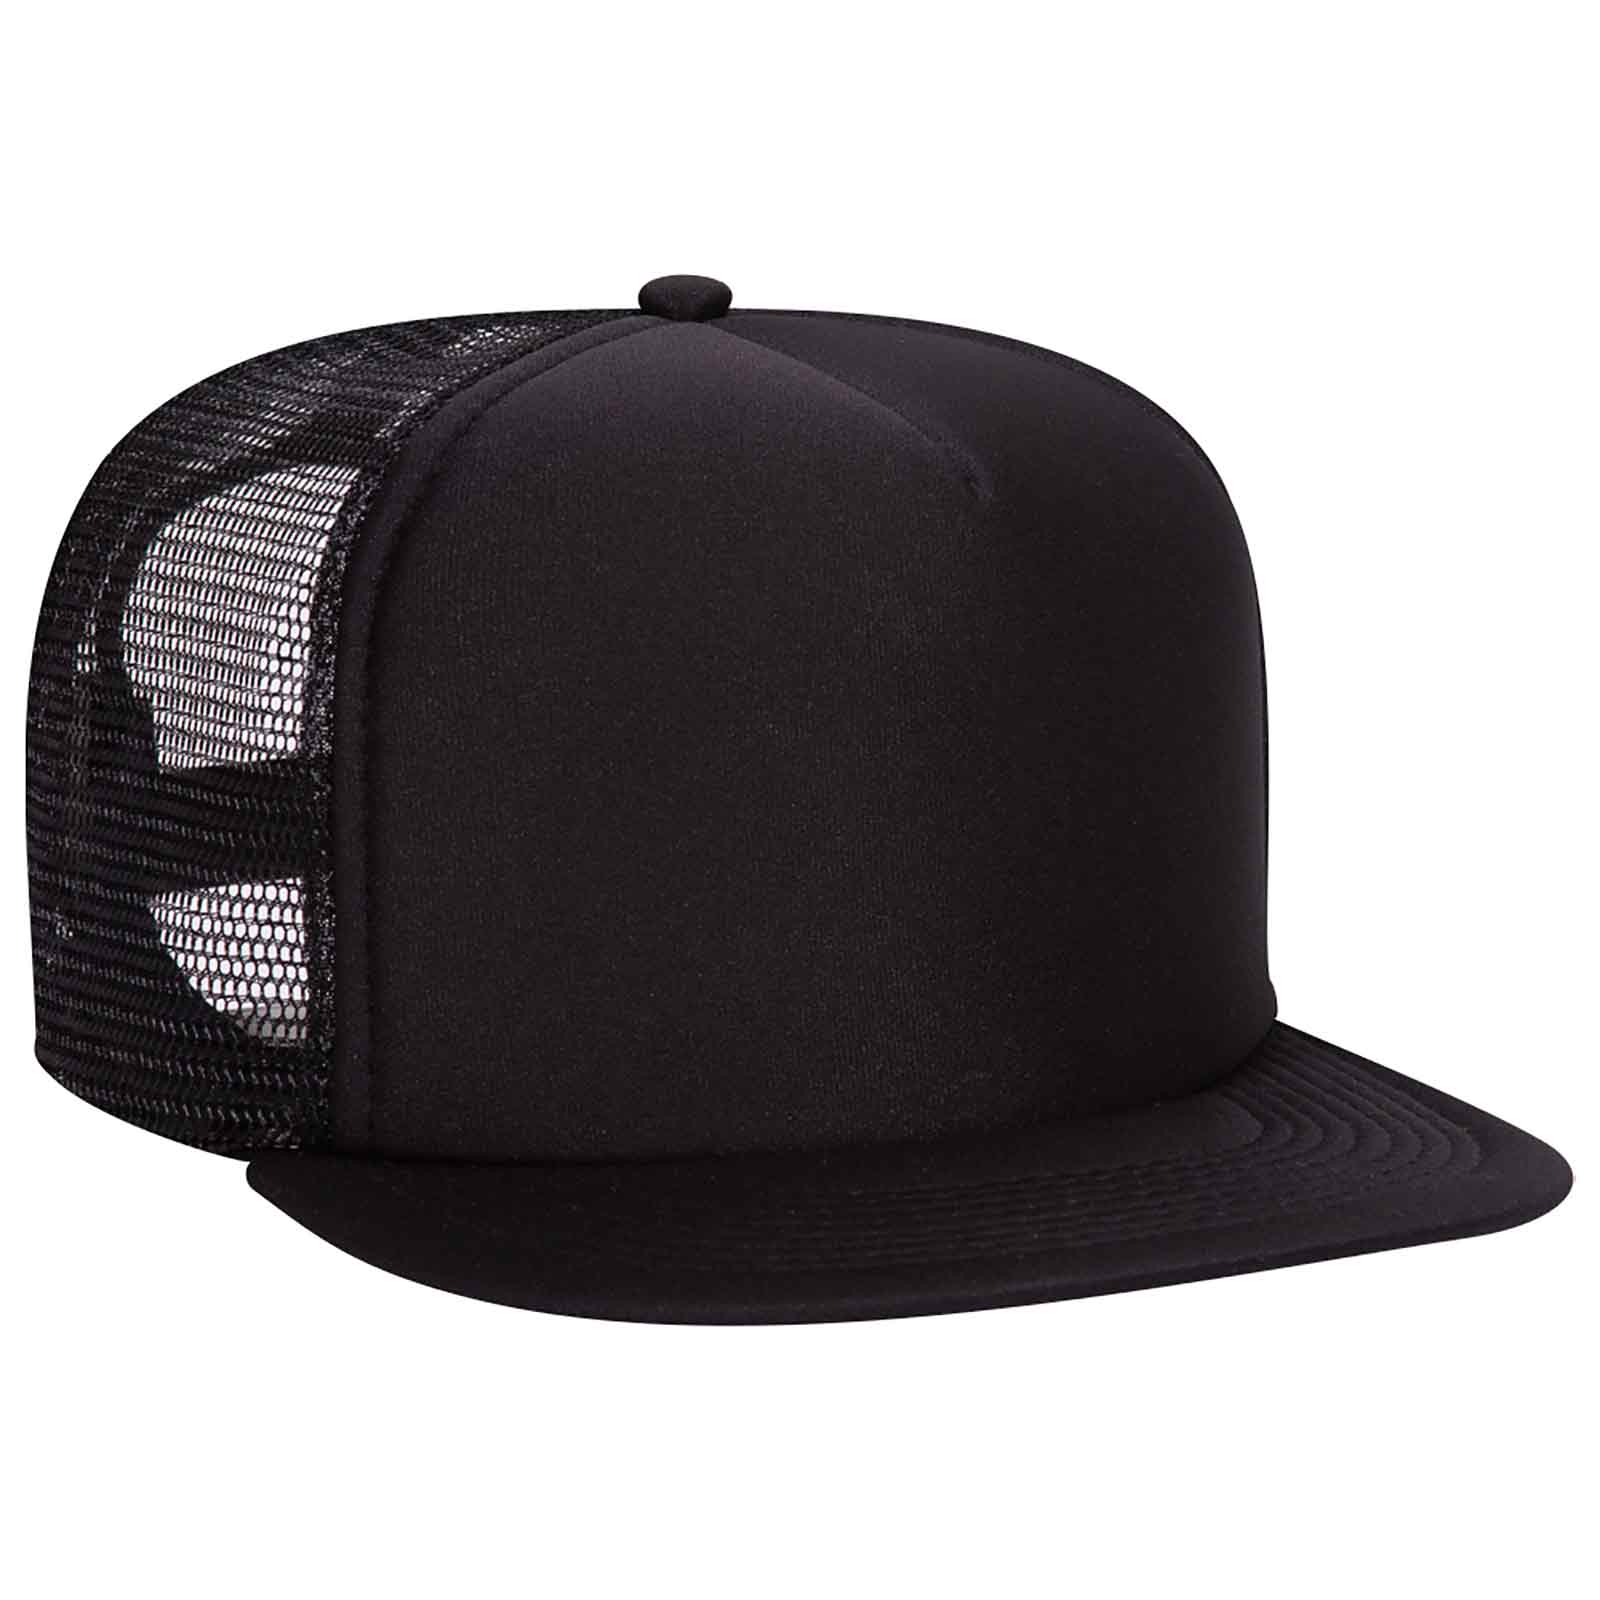 Black Os Baseball Cap, High Crown Snapback Hat, Mesh Back